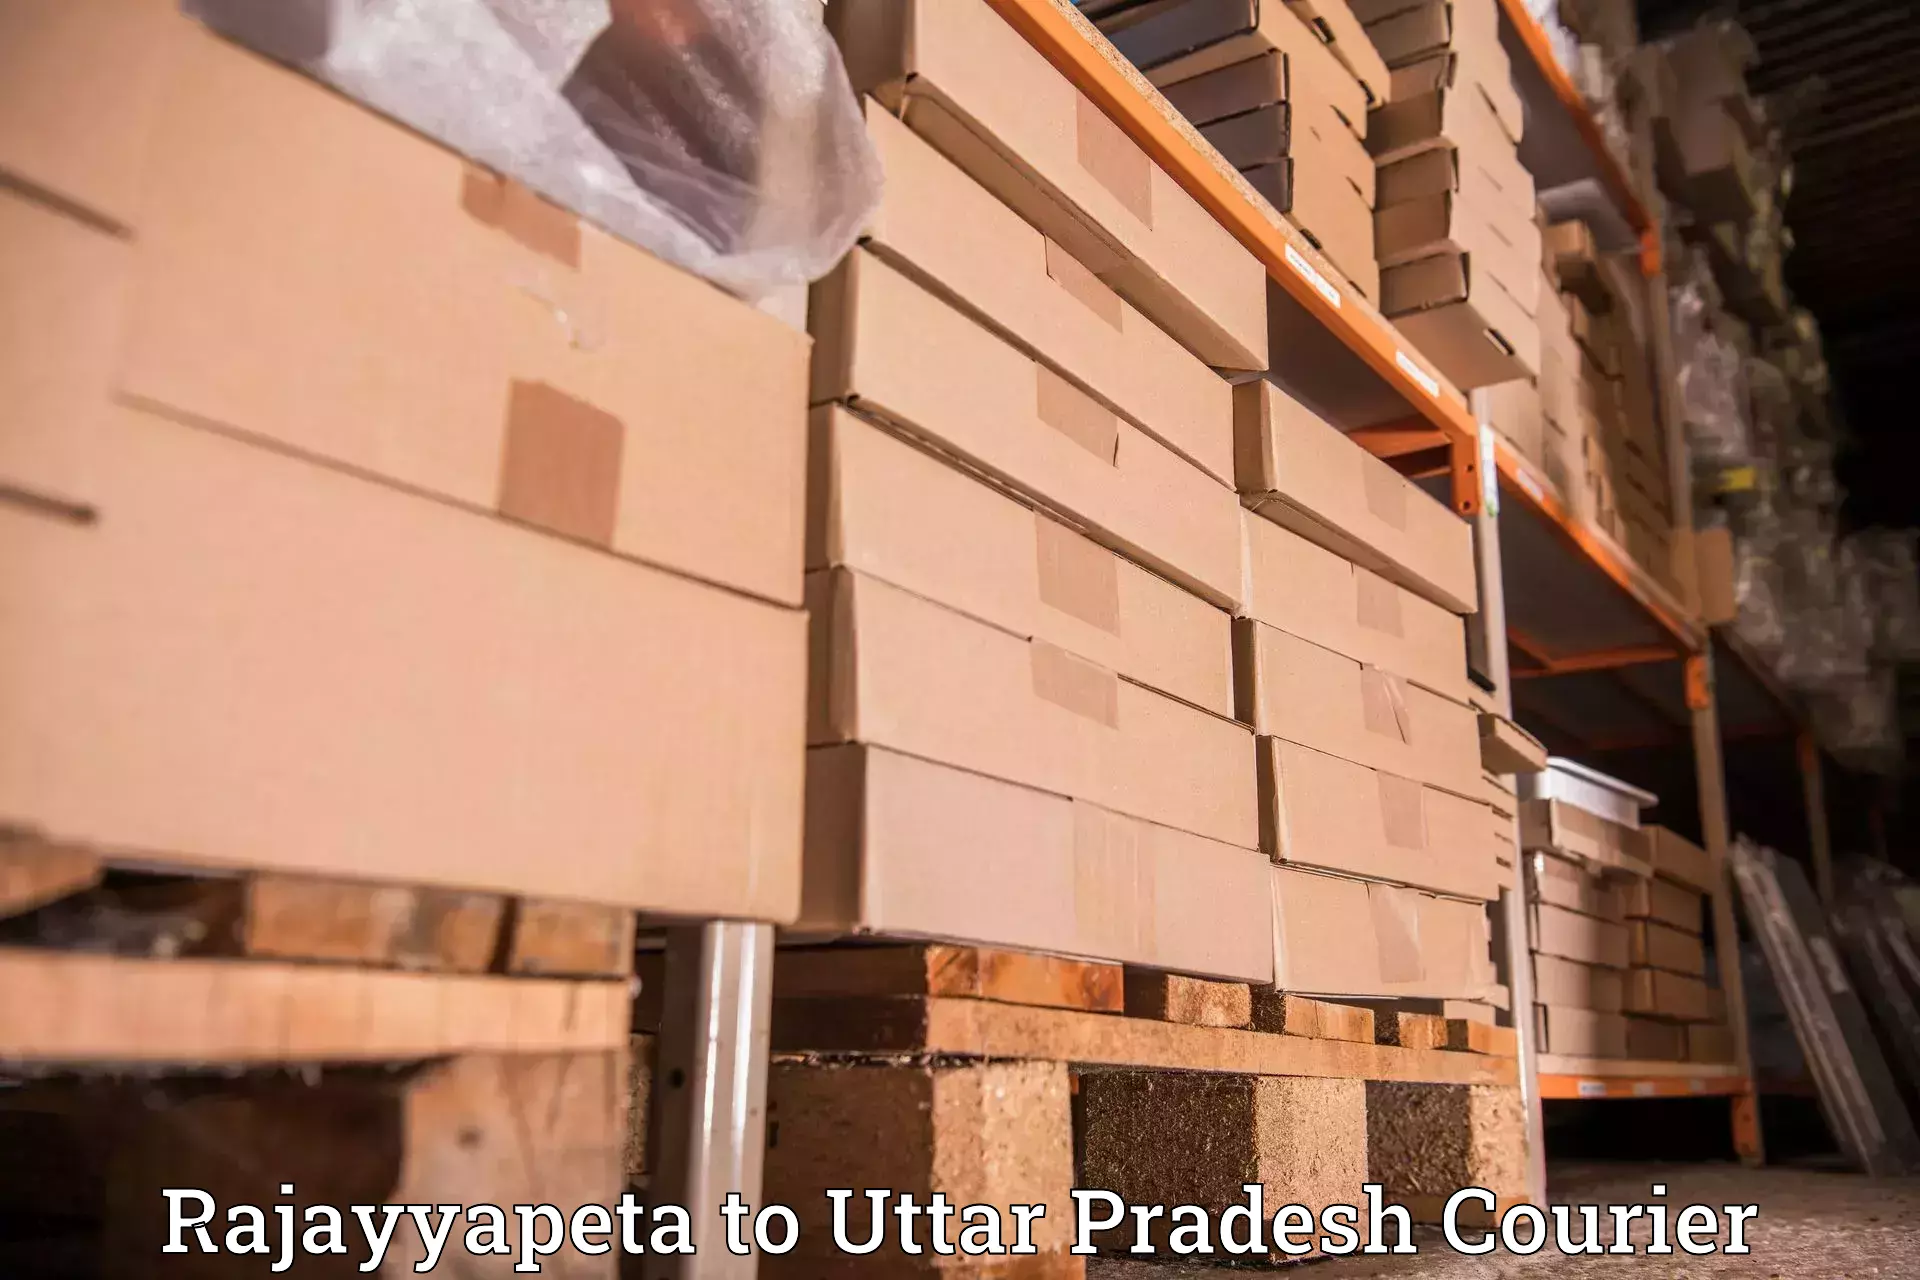 Advanced shipping network Rajayyapeta to Agra